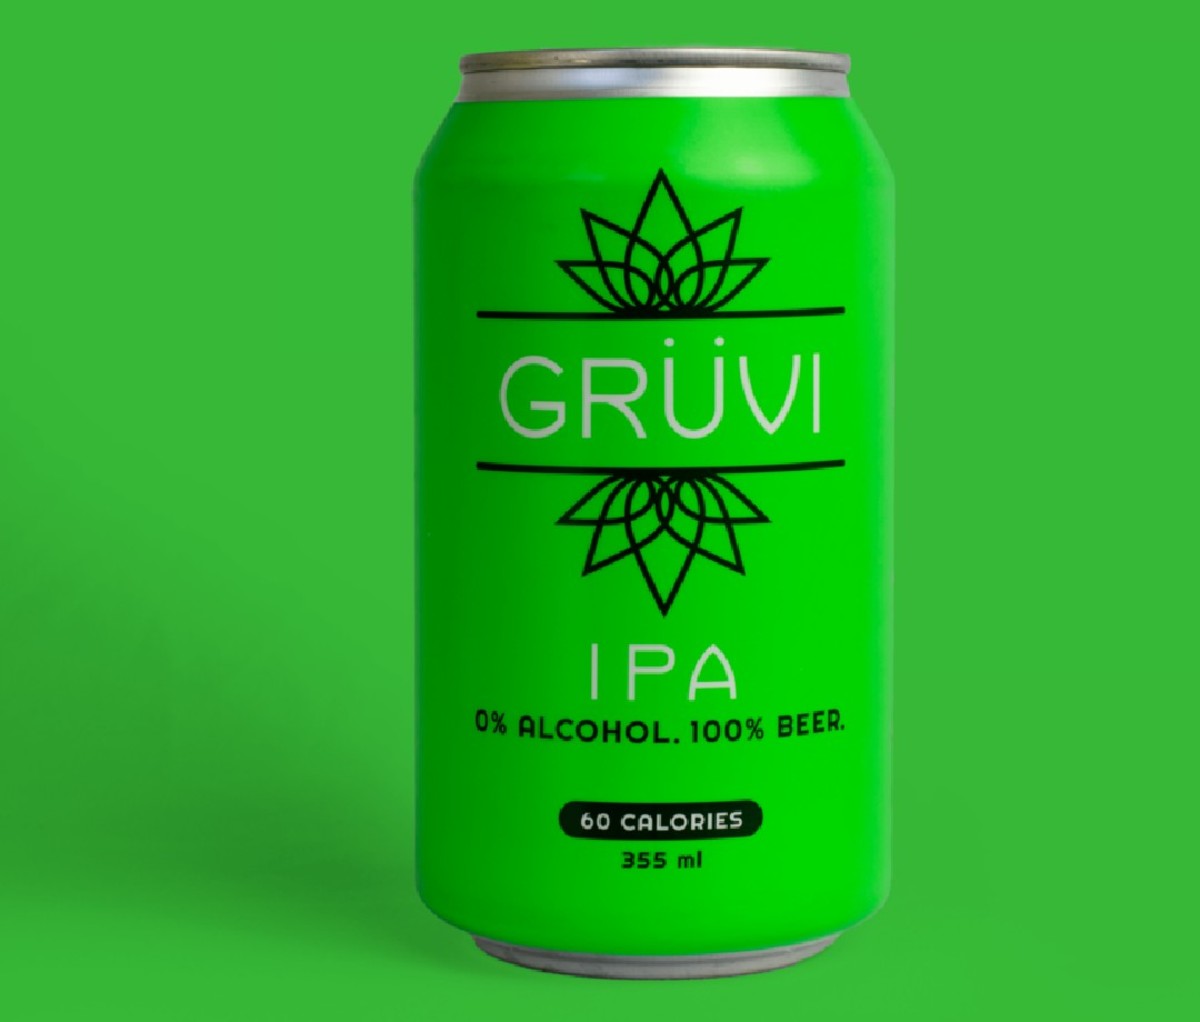 12 oz can of Gruvi non-alcoholic IPA